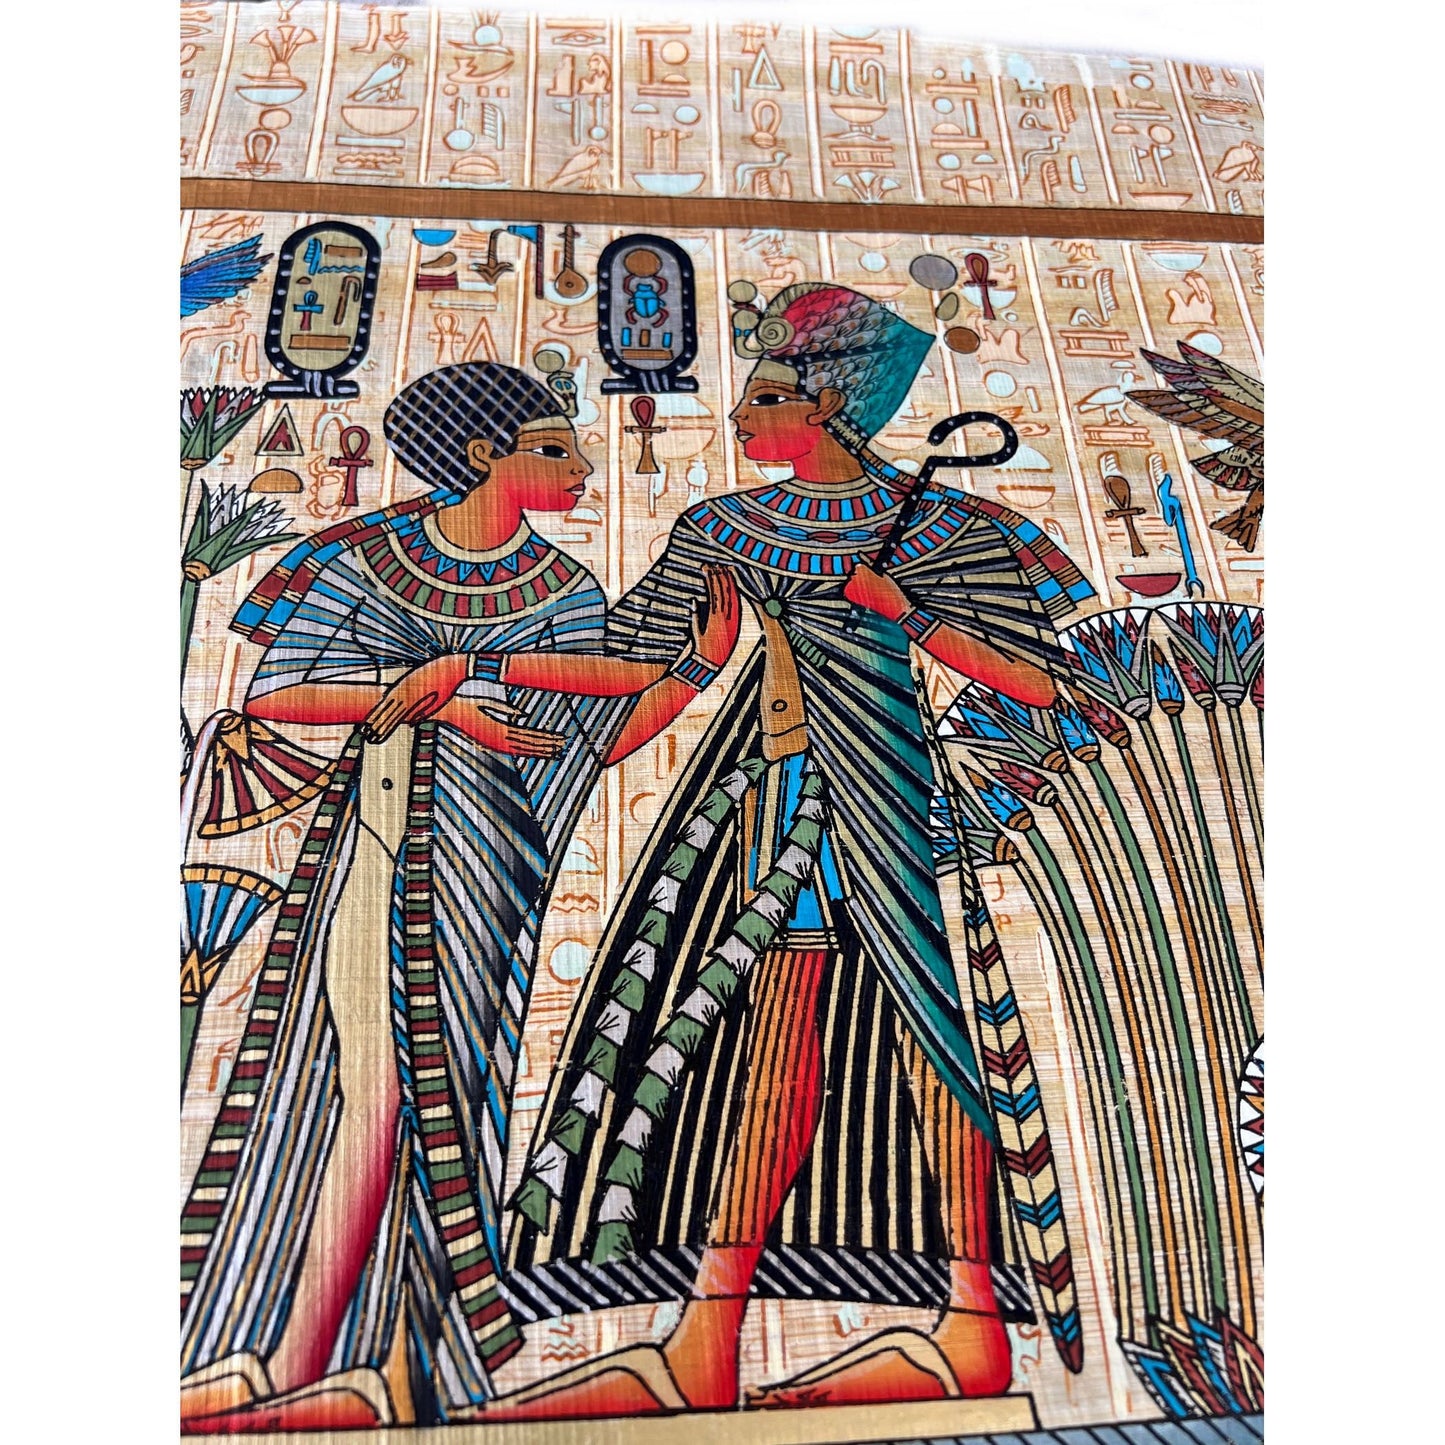 King Tutankhamun Tut accompanied by Queen Ankhesenamen on Nile Boat Papyrus